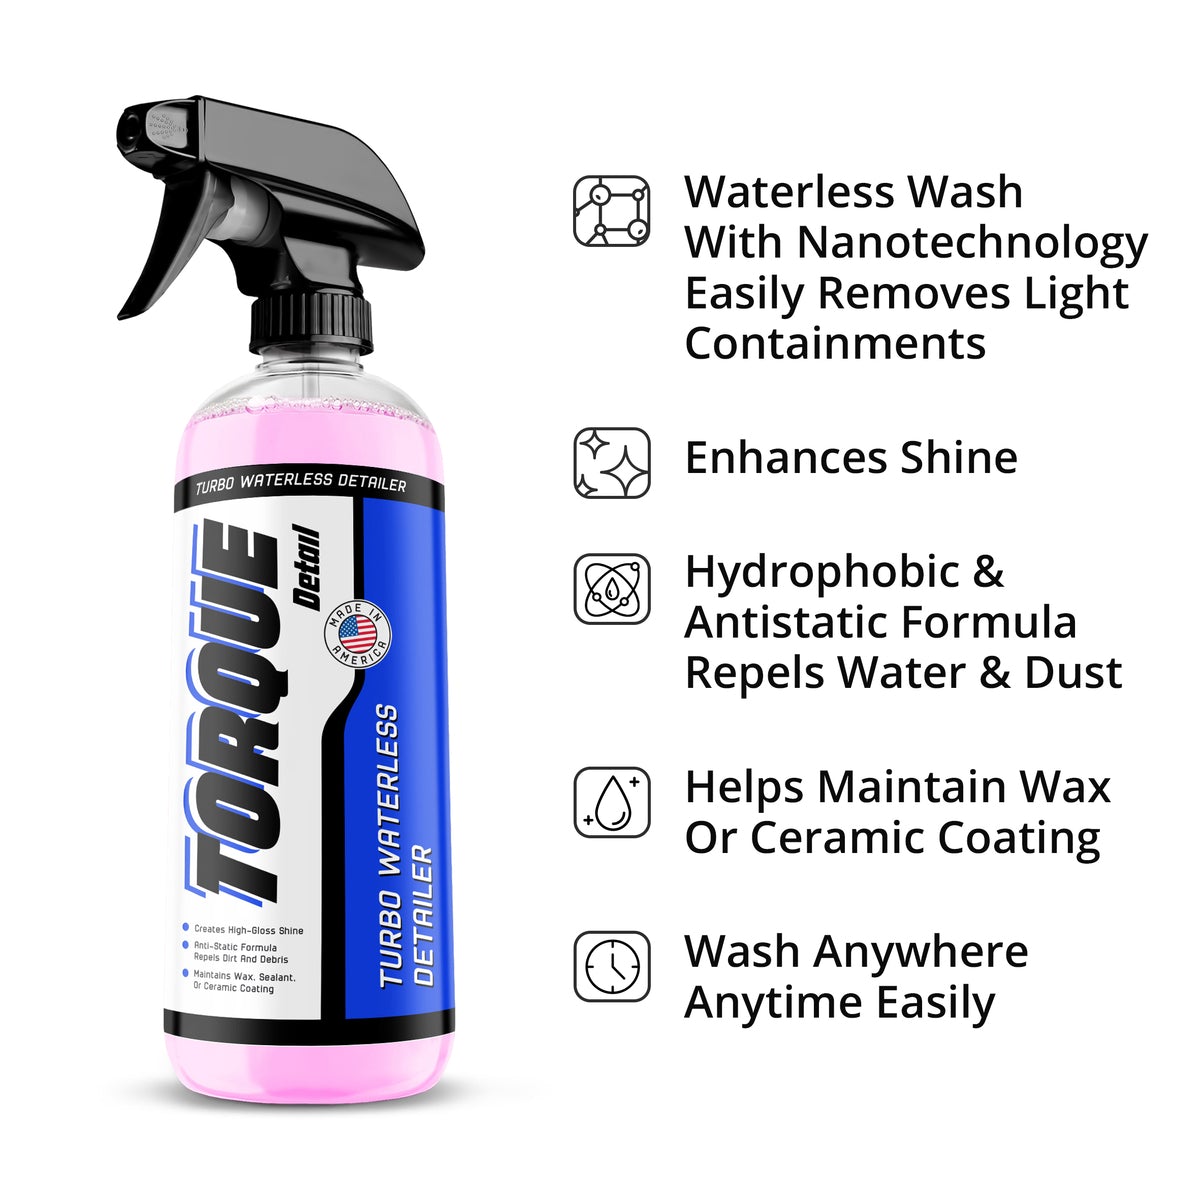 Turbo Wax Shampoo Professional Grade